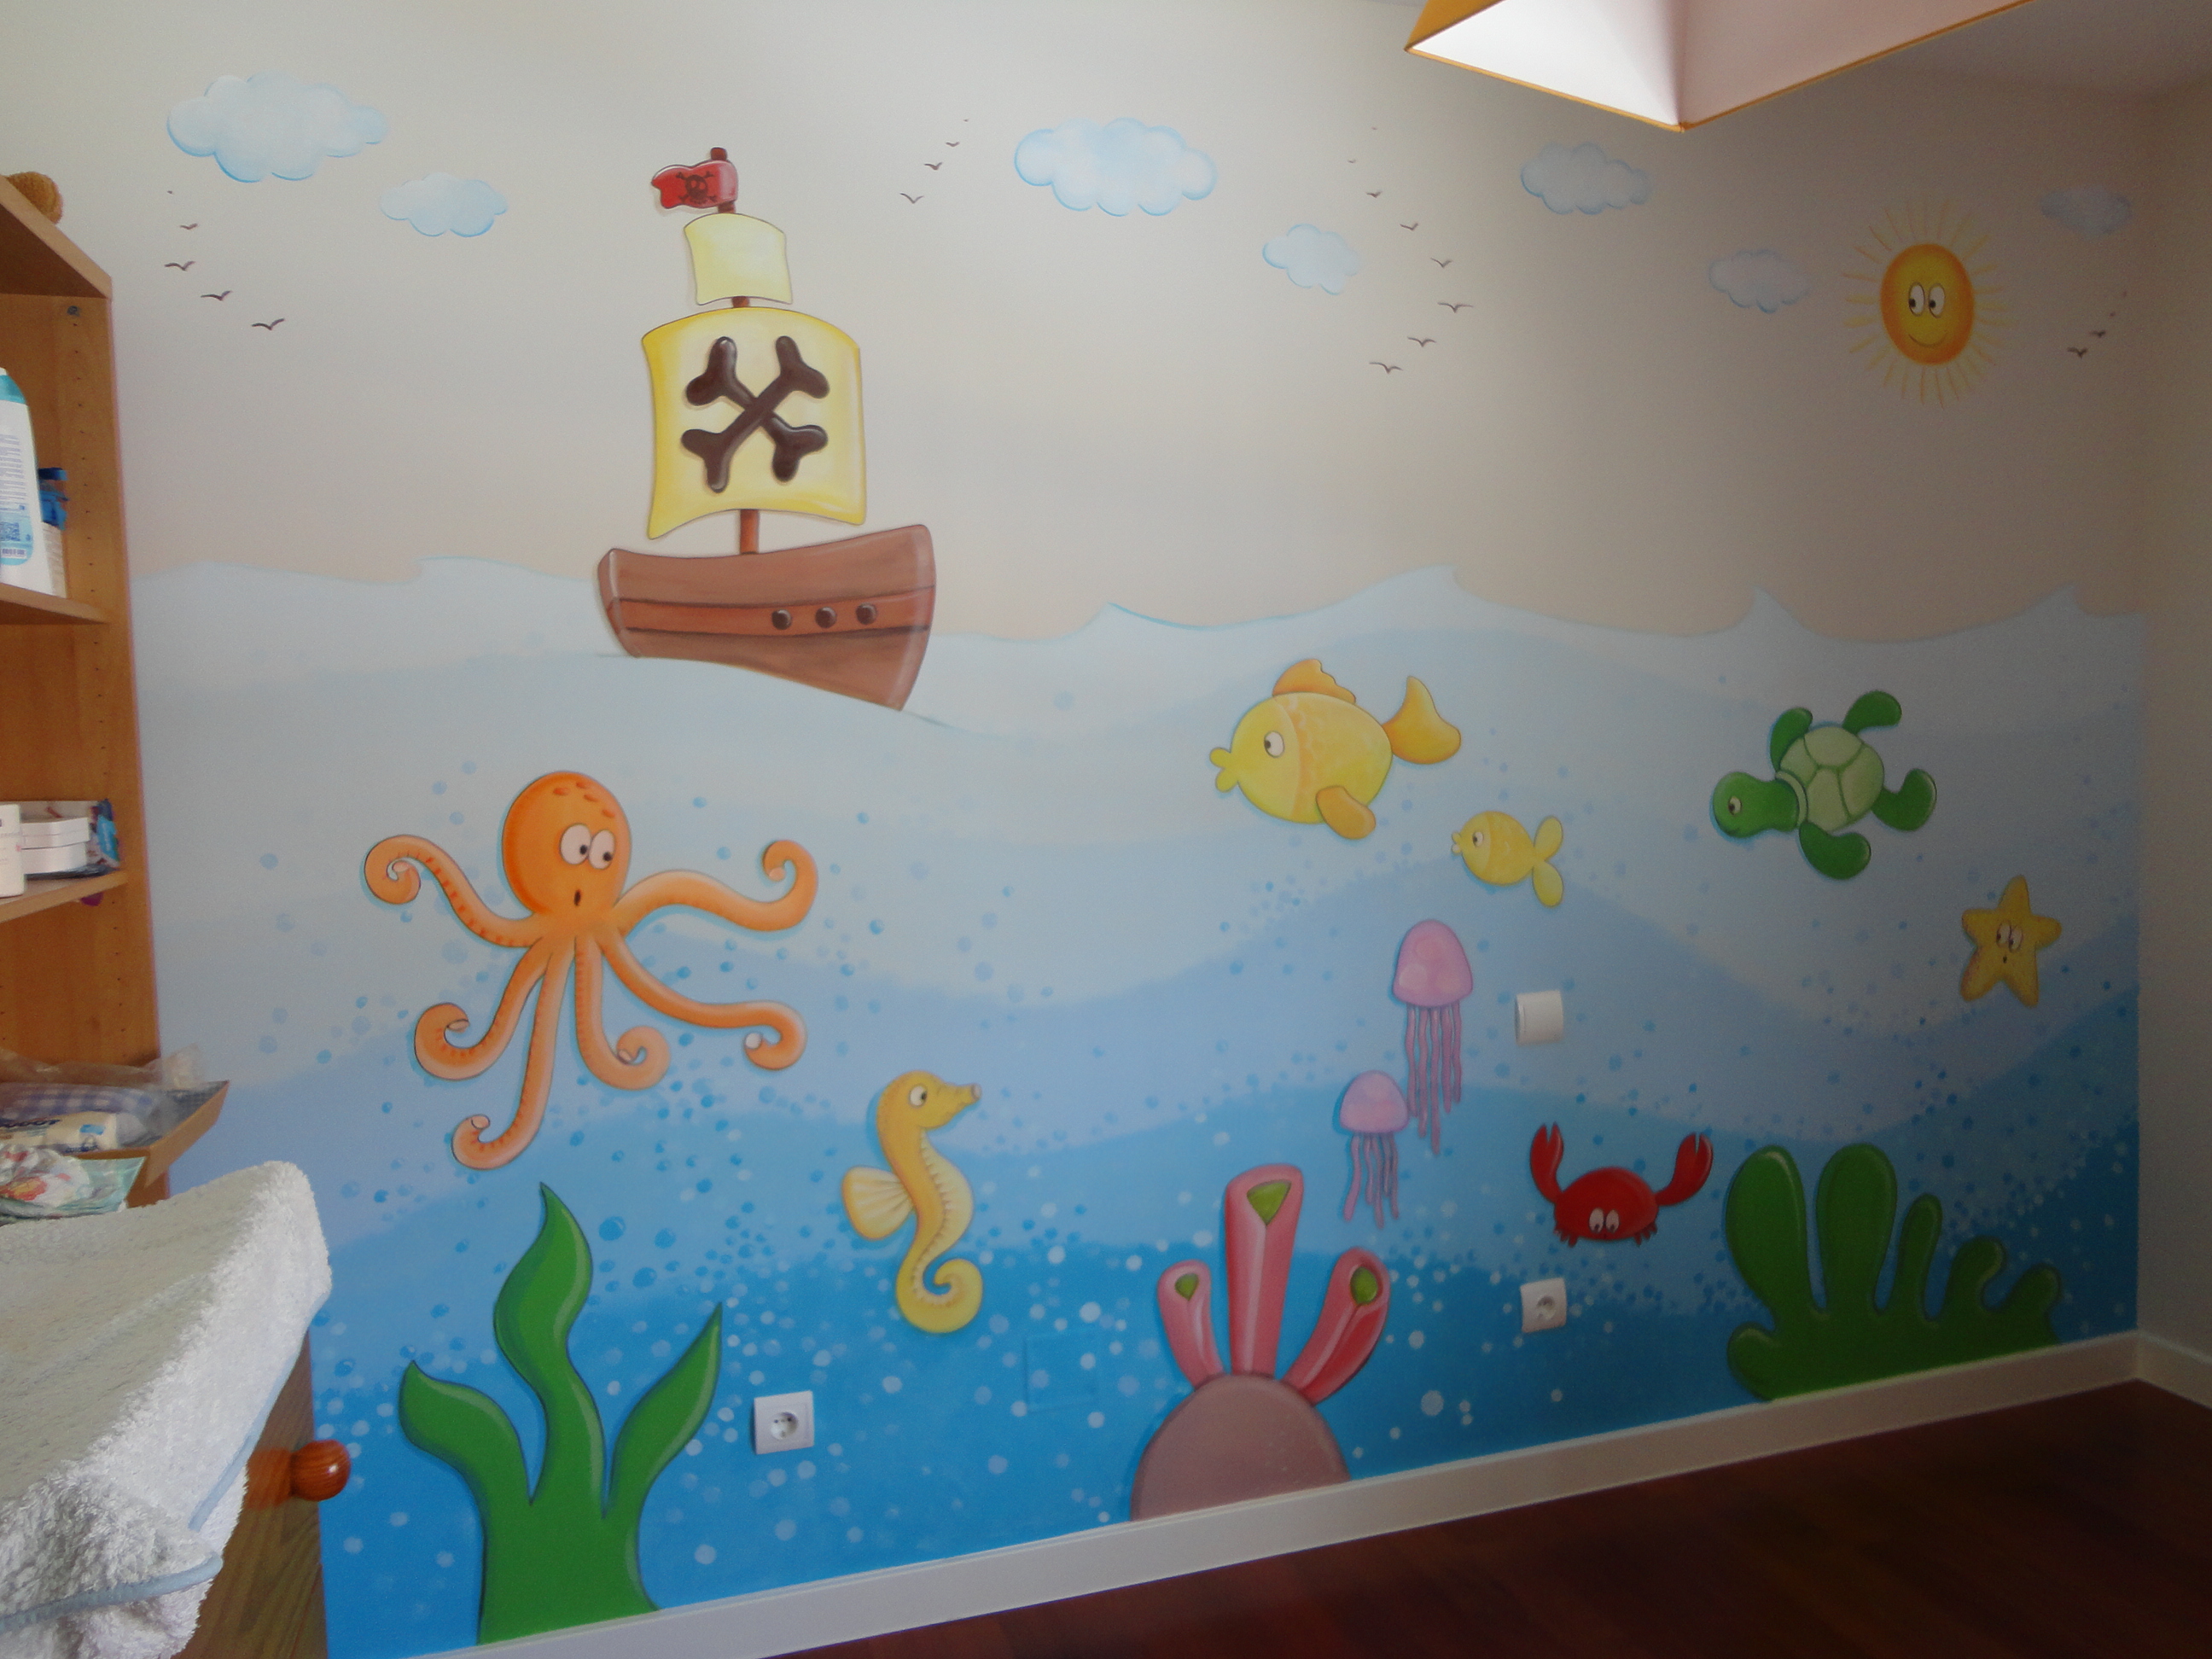 murales en opticas infantiles, clinicas dentales, centros comerciales, rehabilitacion infantil decoracion